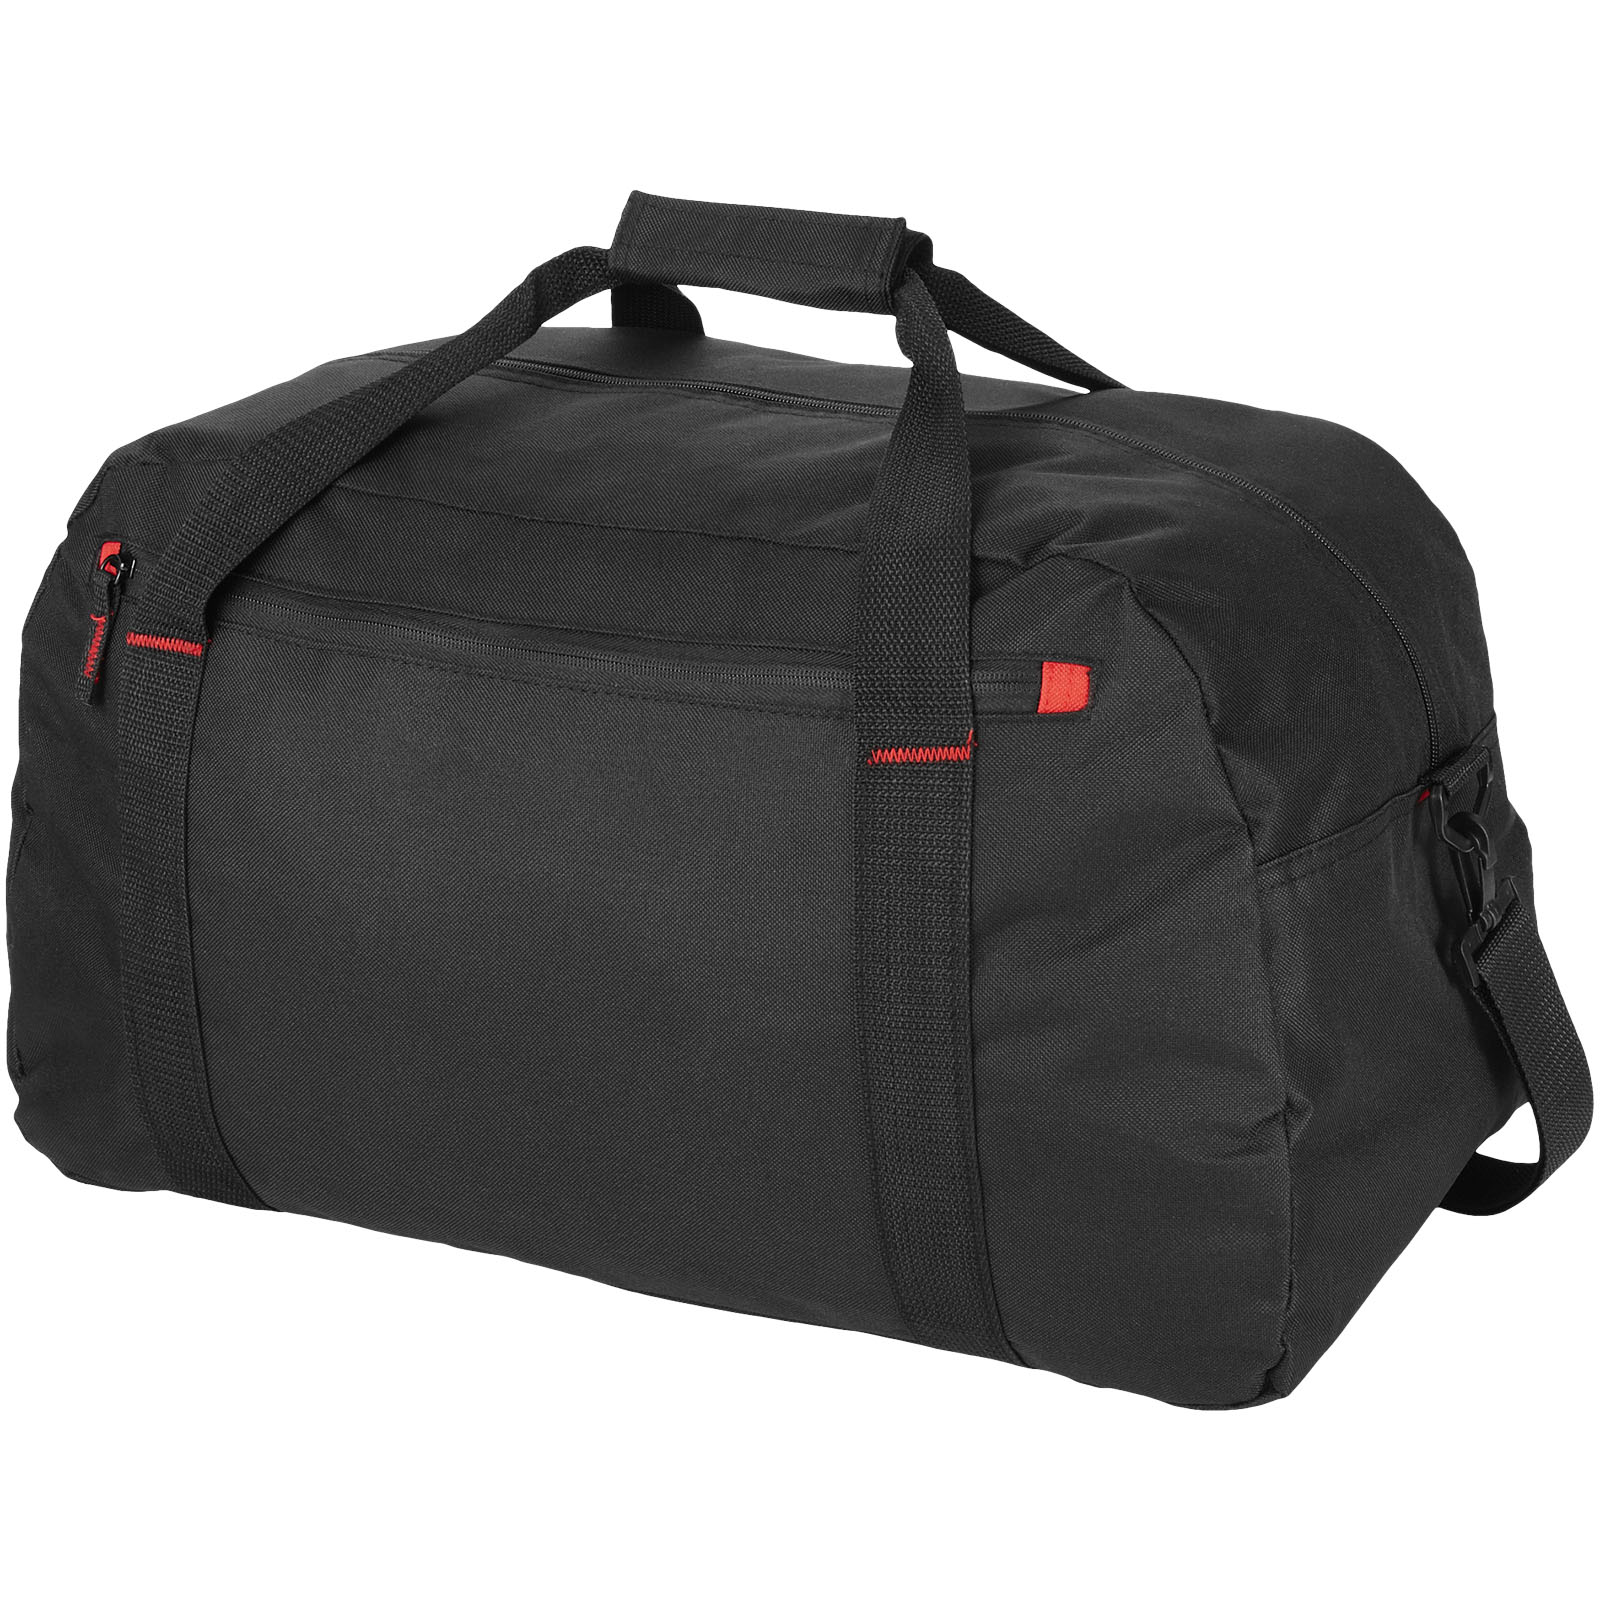 Advertising Travel bags - Vancouver travel duffel bag 35L